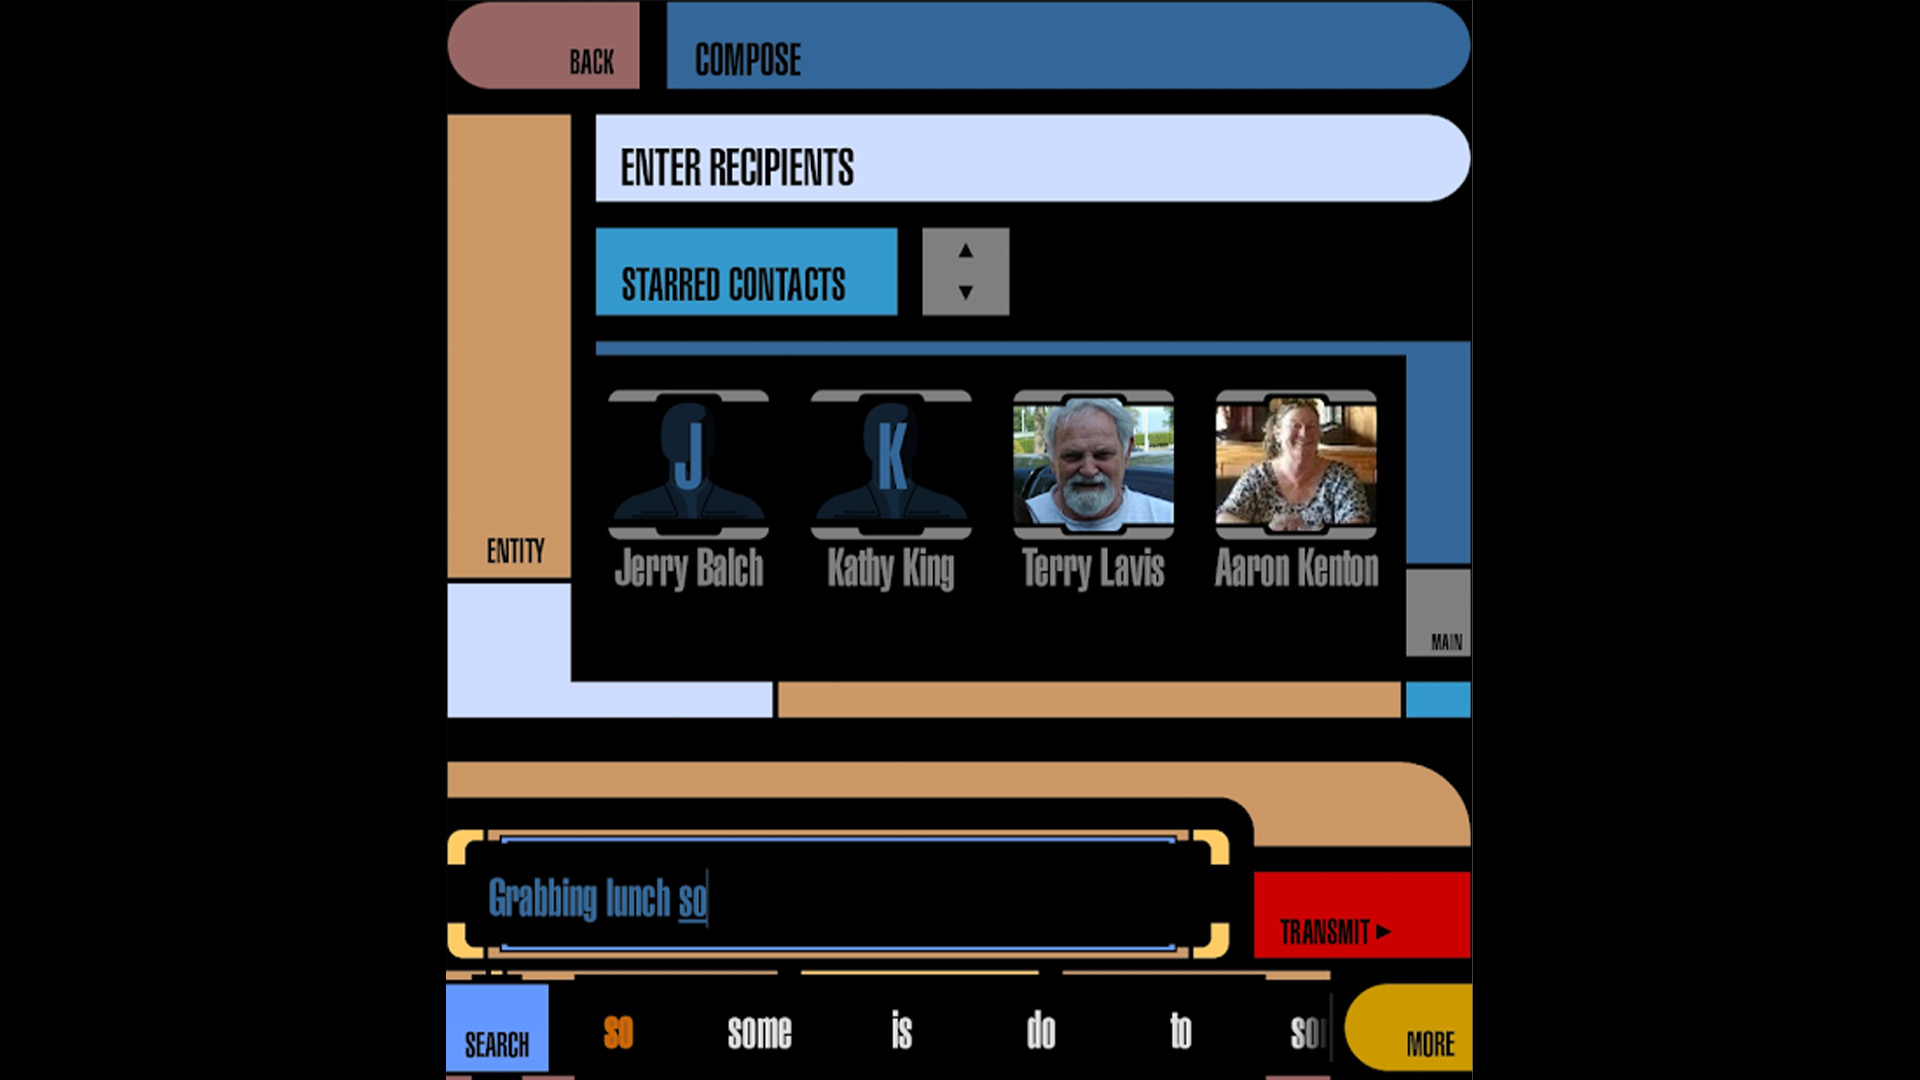 Trek TI Keyboard best star trek apps for Android